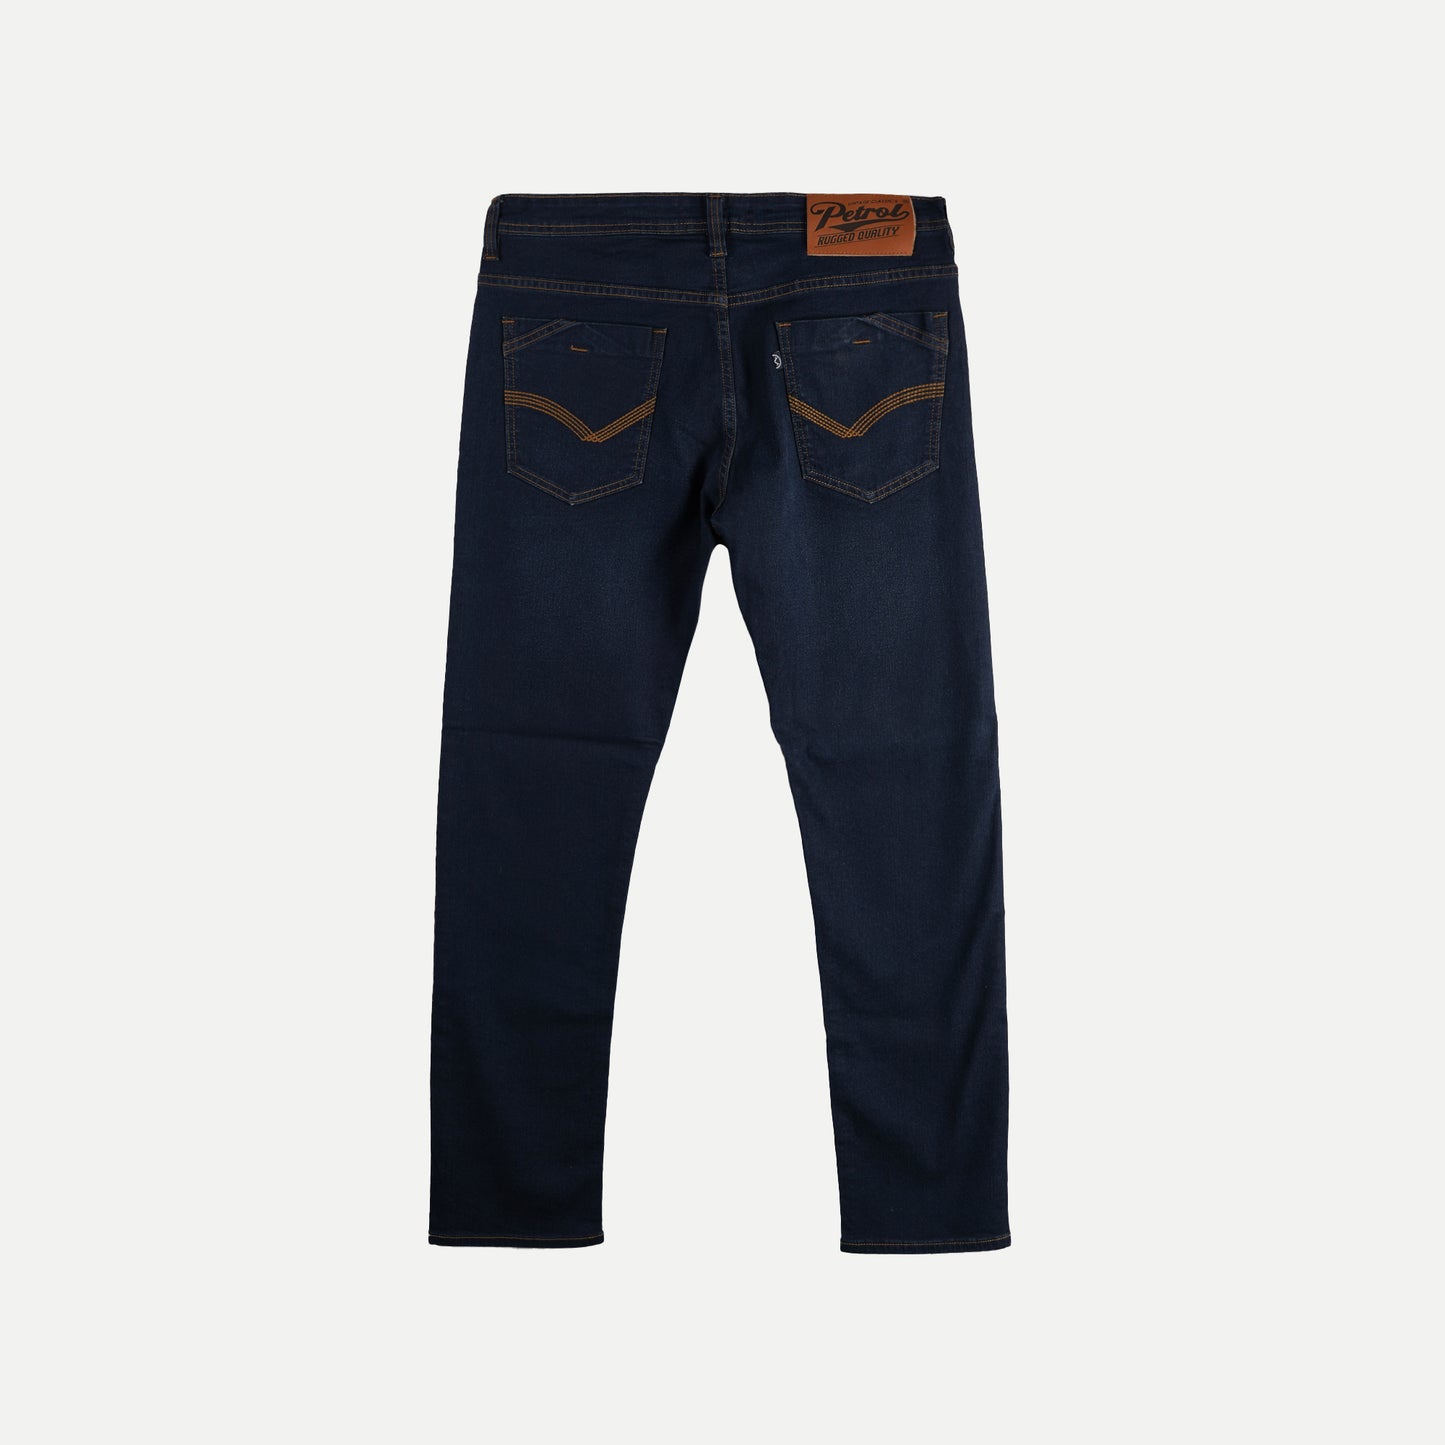 Petrol Basic Denim Pants for Men Skin Tight Fitting Mid Rise Trendy fashion Casual Bottoms Dark Shade Jeans for Men 143463-U (Dark Shade)